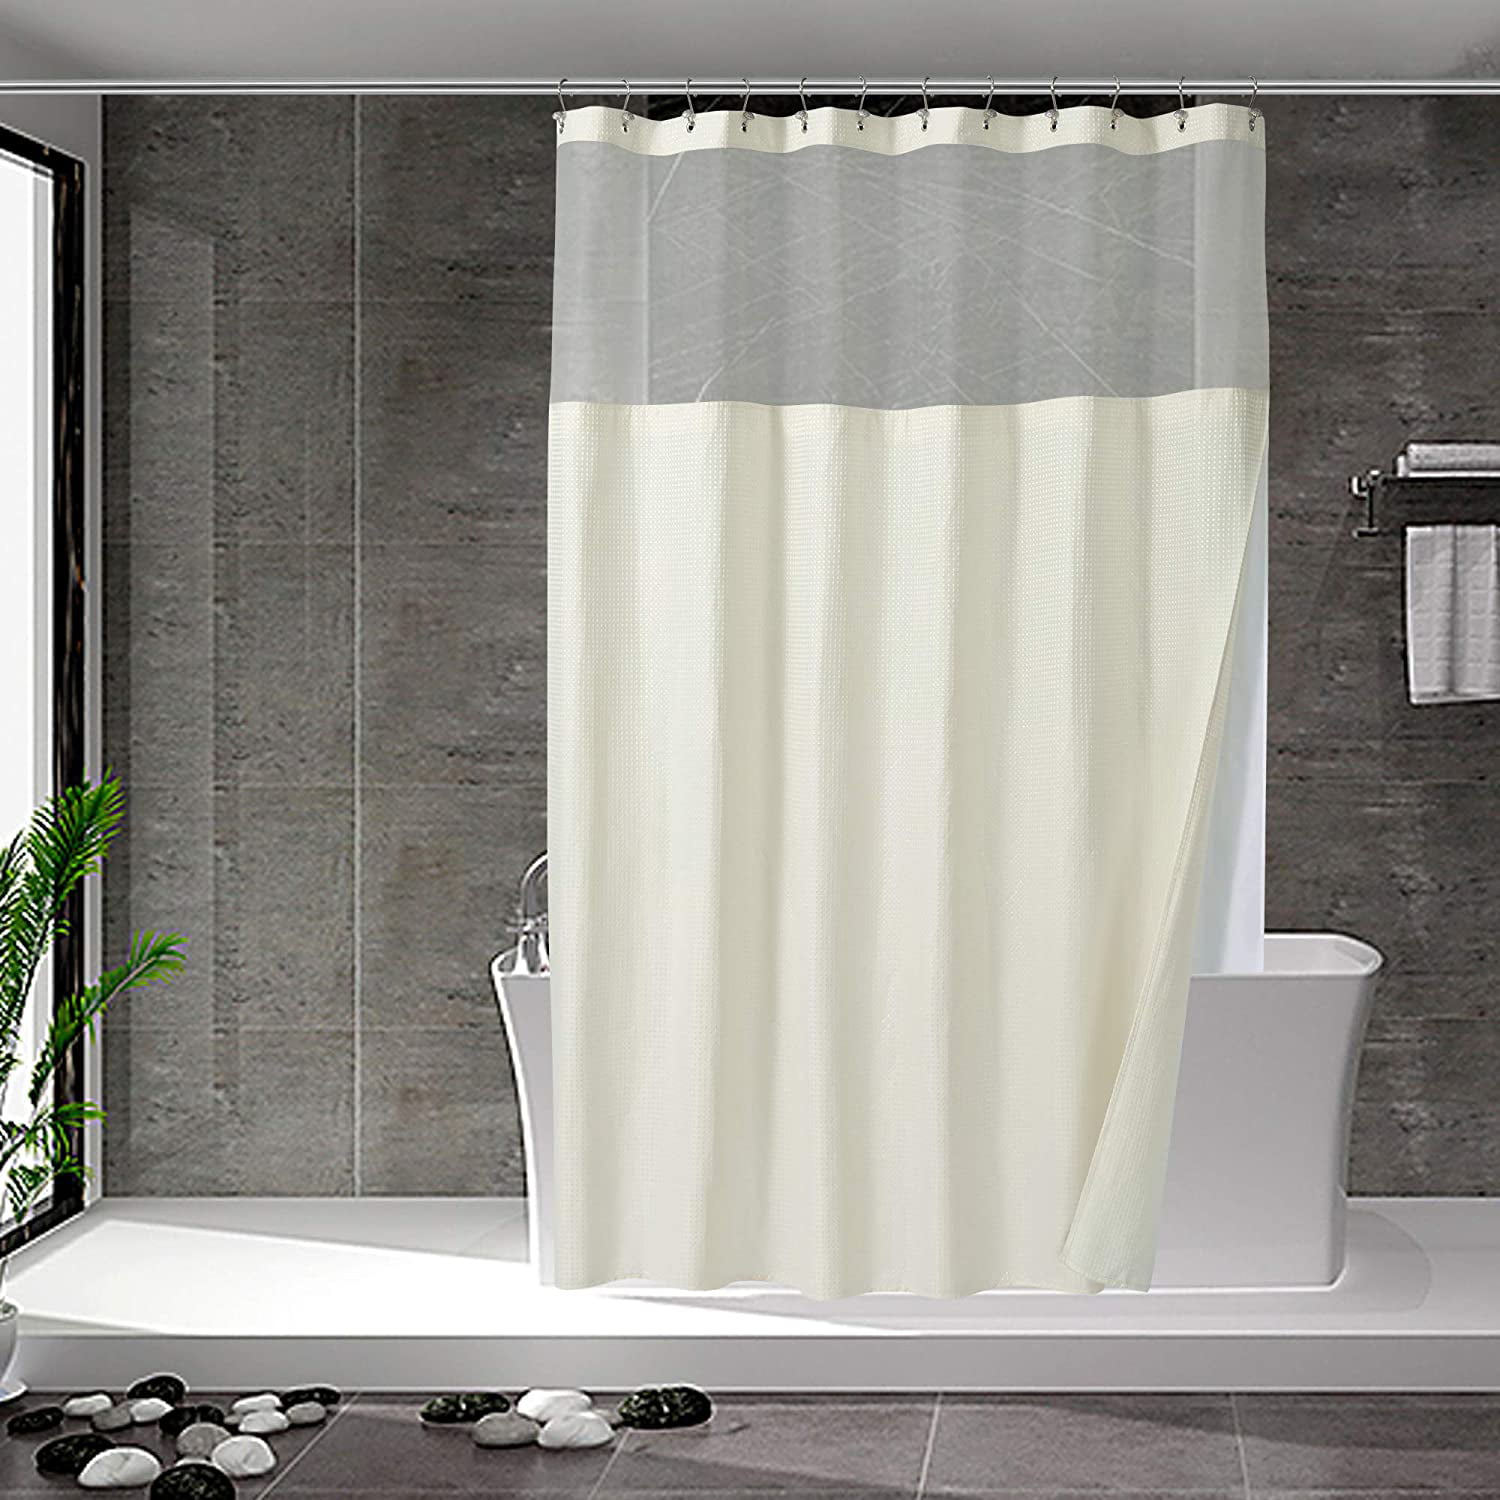 Retro Vintage Texture Bathroom Waterproof Fabric Shower Curtain With 12 Hook Set 